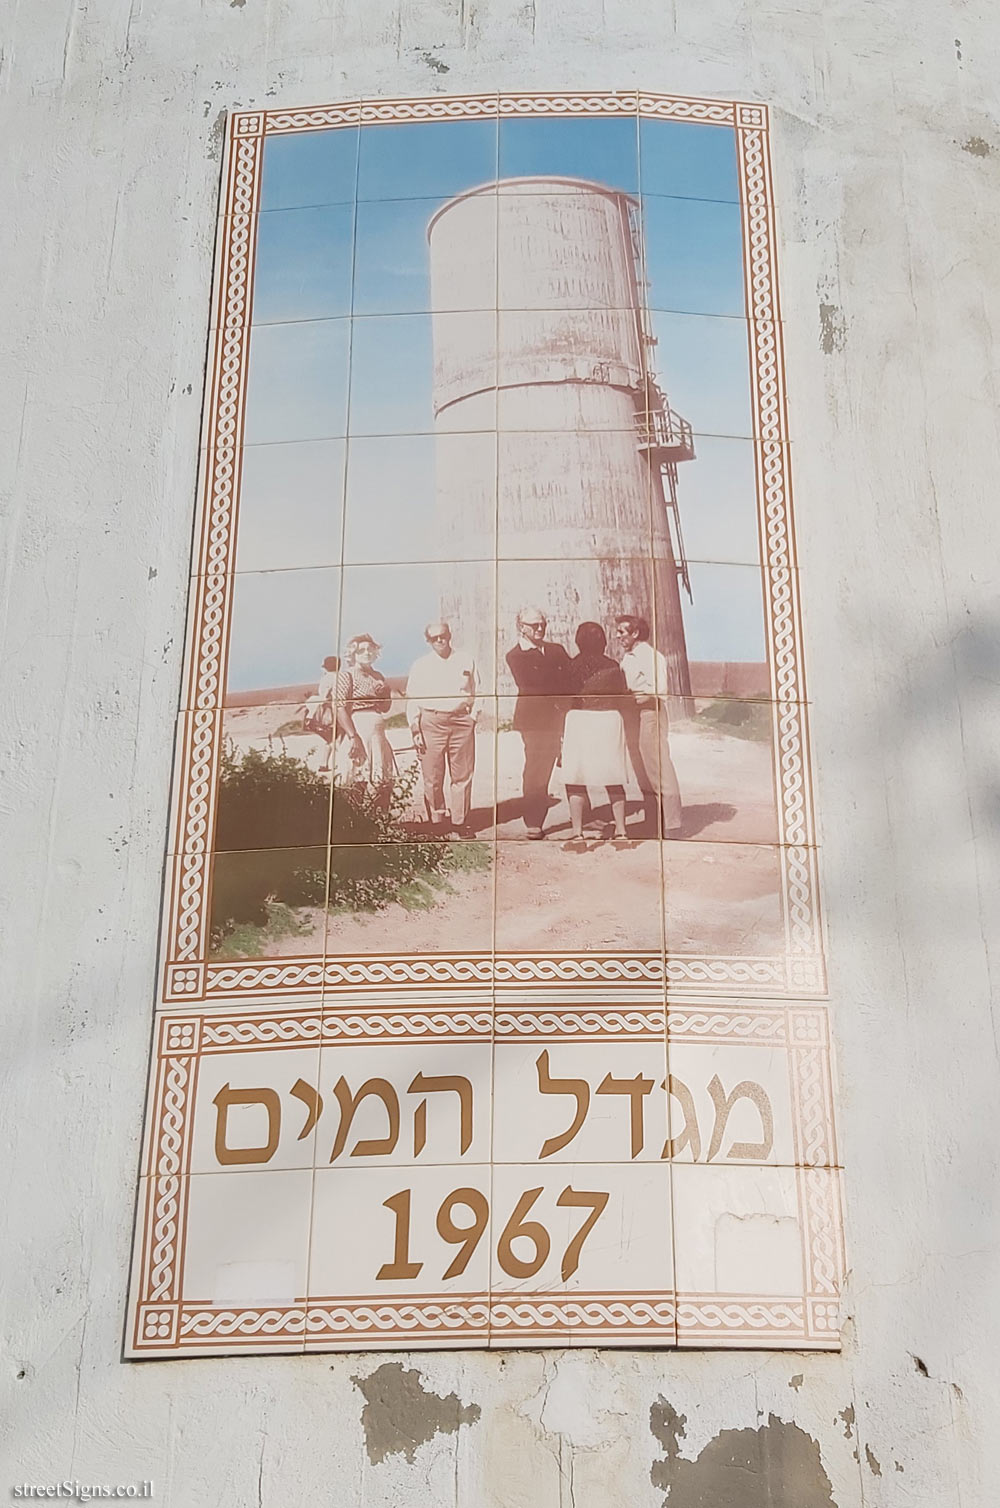 Heritage Sites in Israel - "Mitzpe Hayam" - The Water Tower - HaGdud Haivri St 4, Netanya, Israel